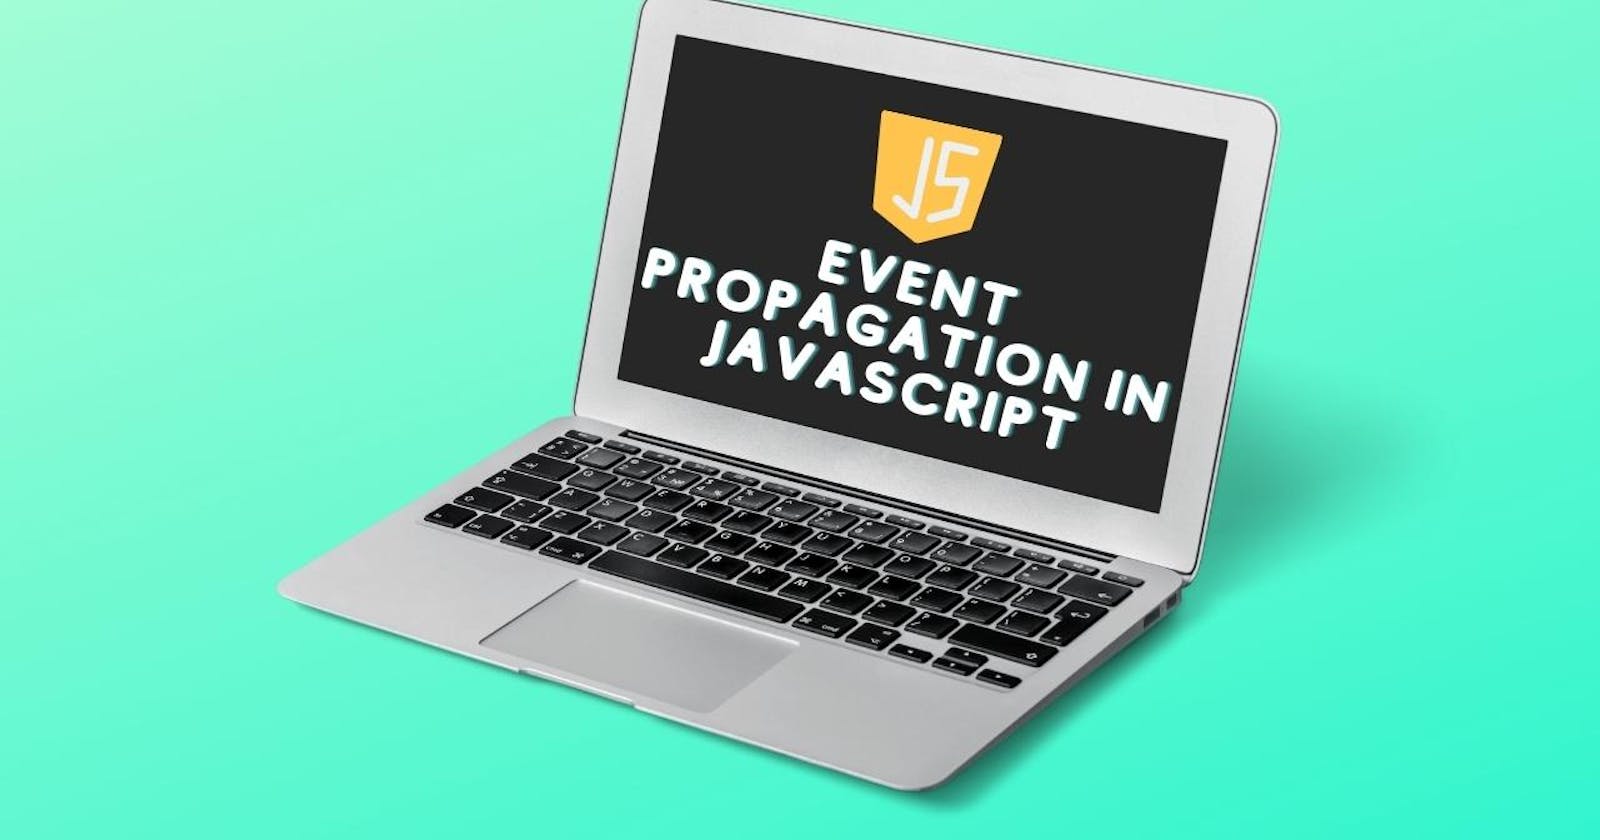 Event Propagation In Javascript